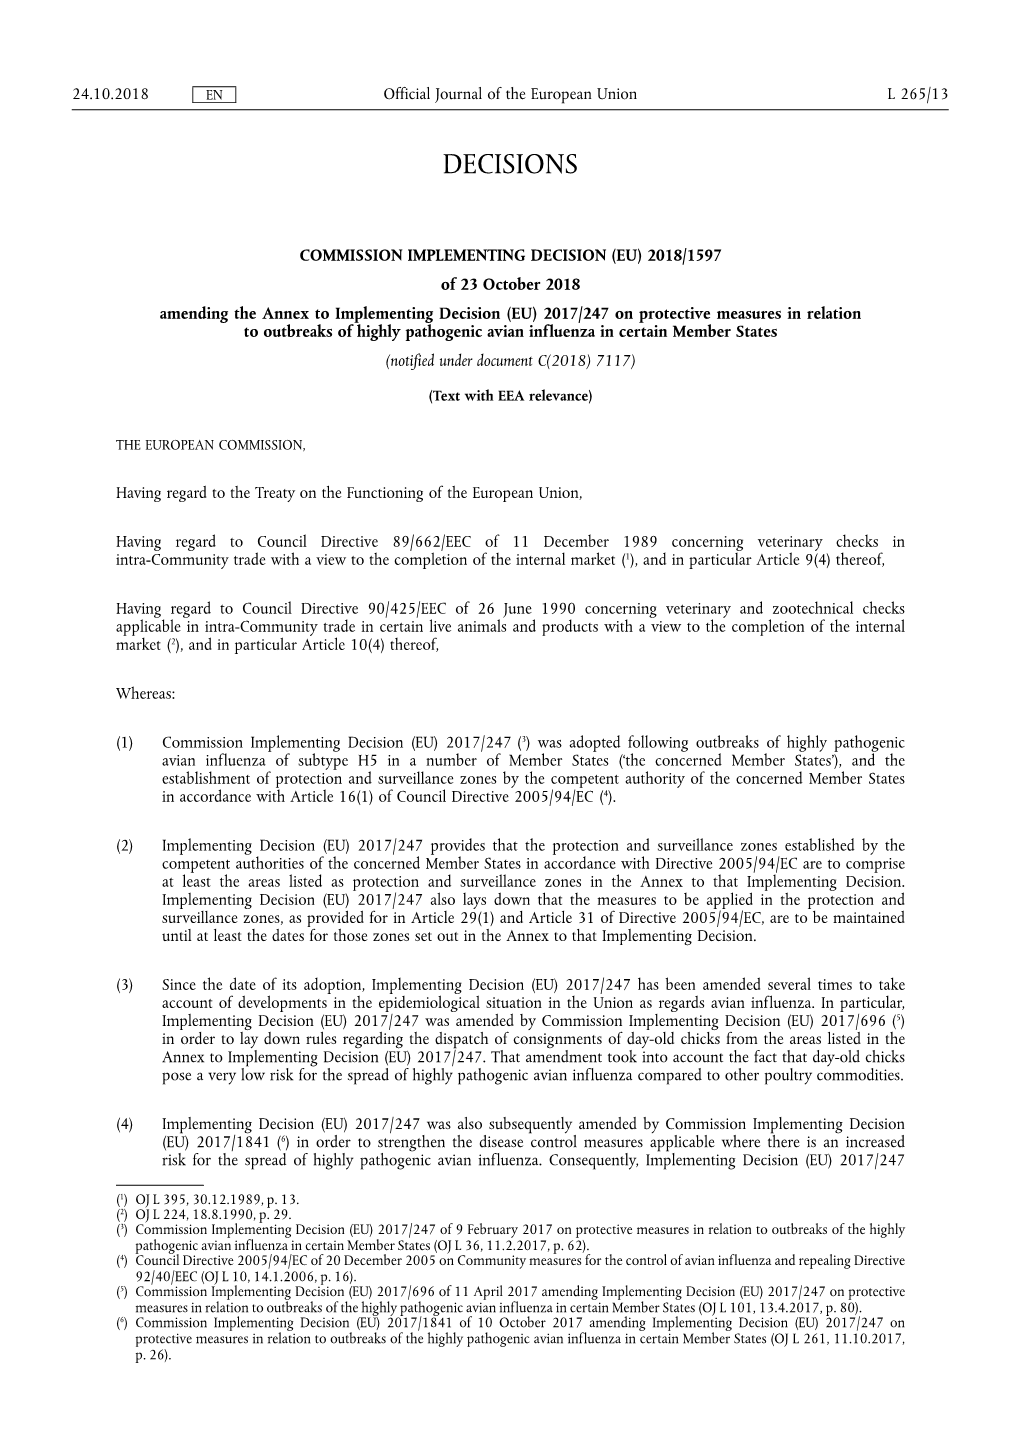 Commission Implementing Decision (Eu)